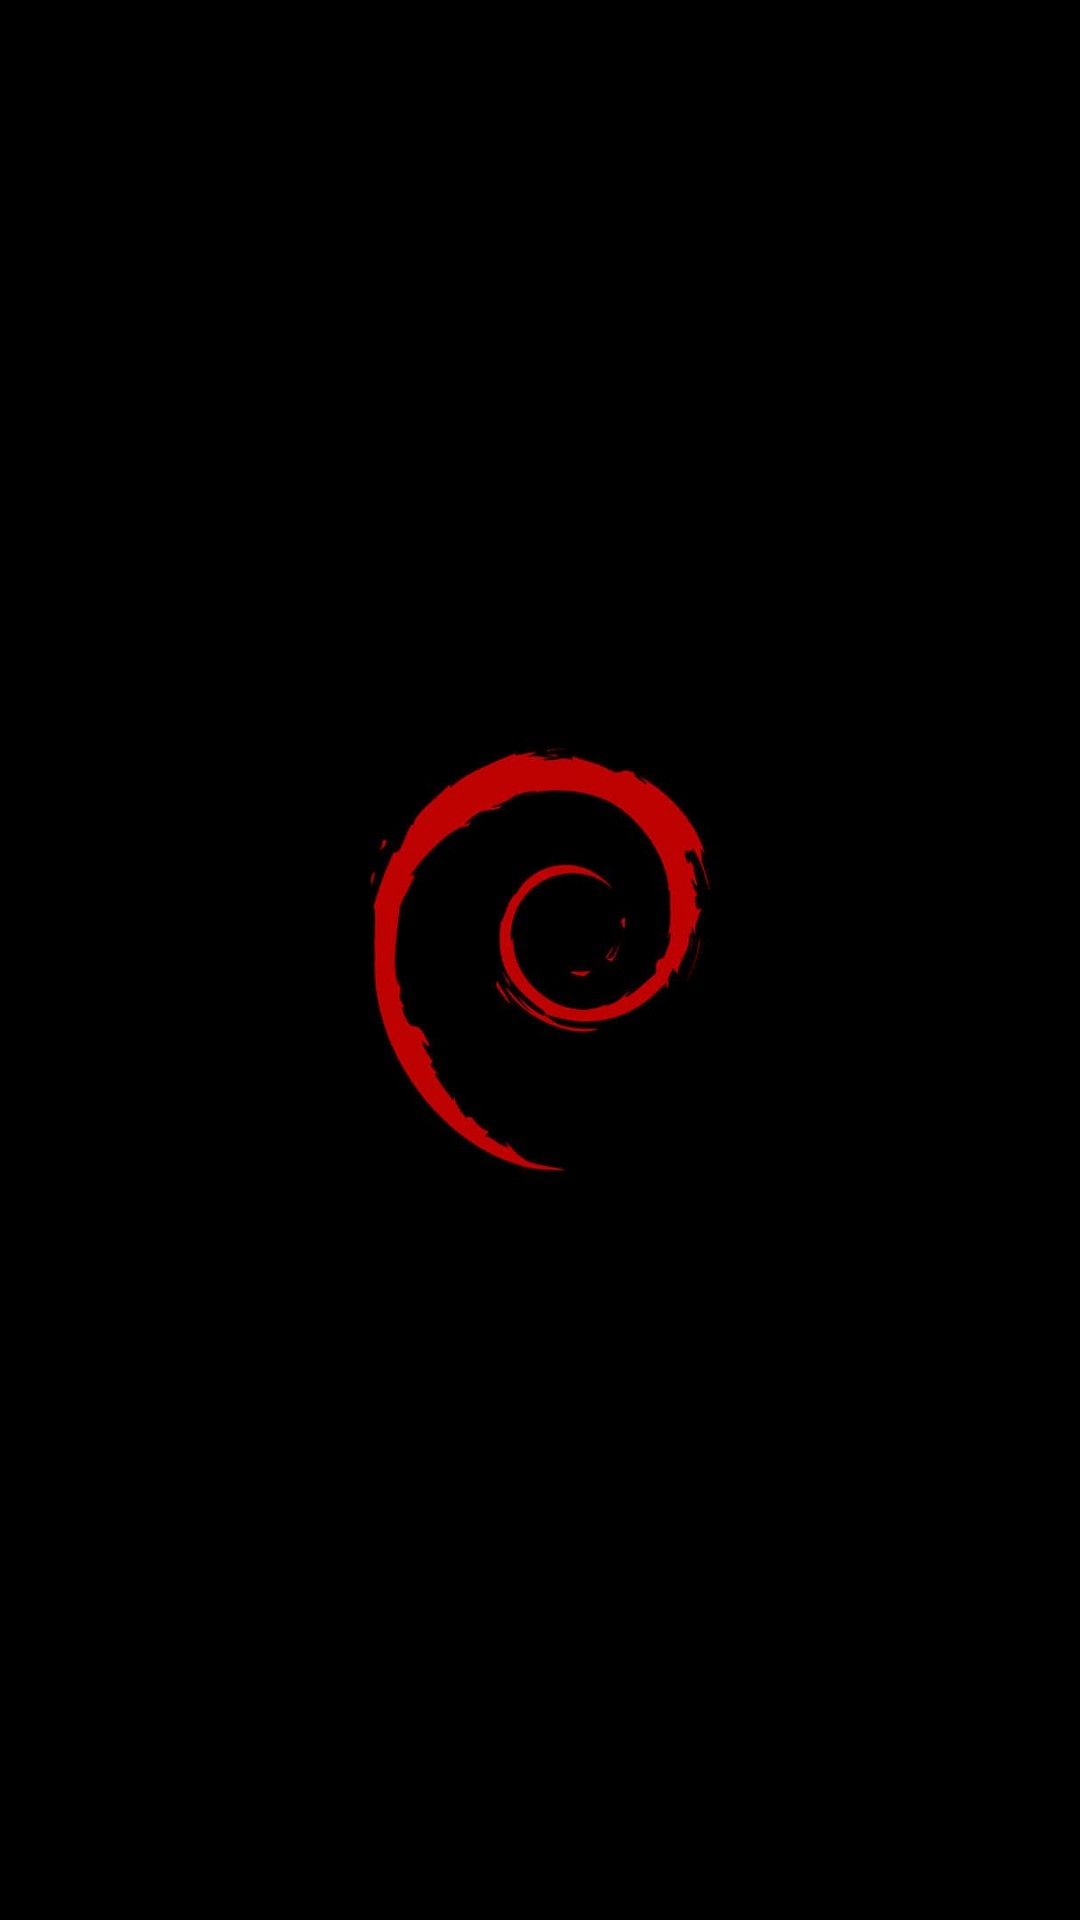 Linux Debian Wallpaper for Google Nexus 5